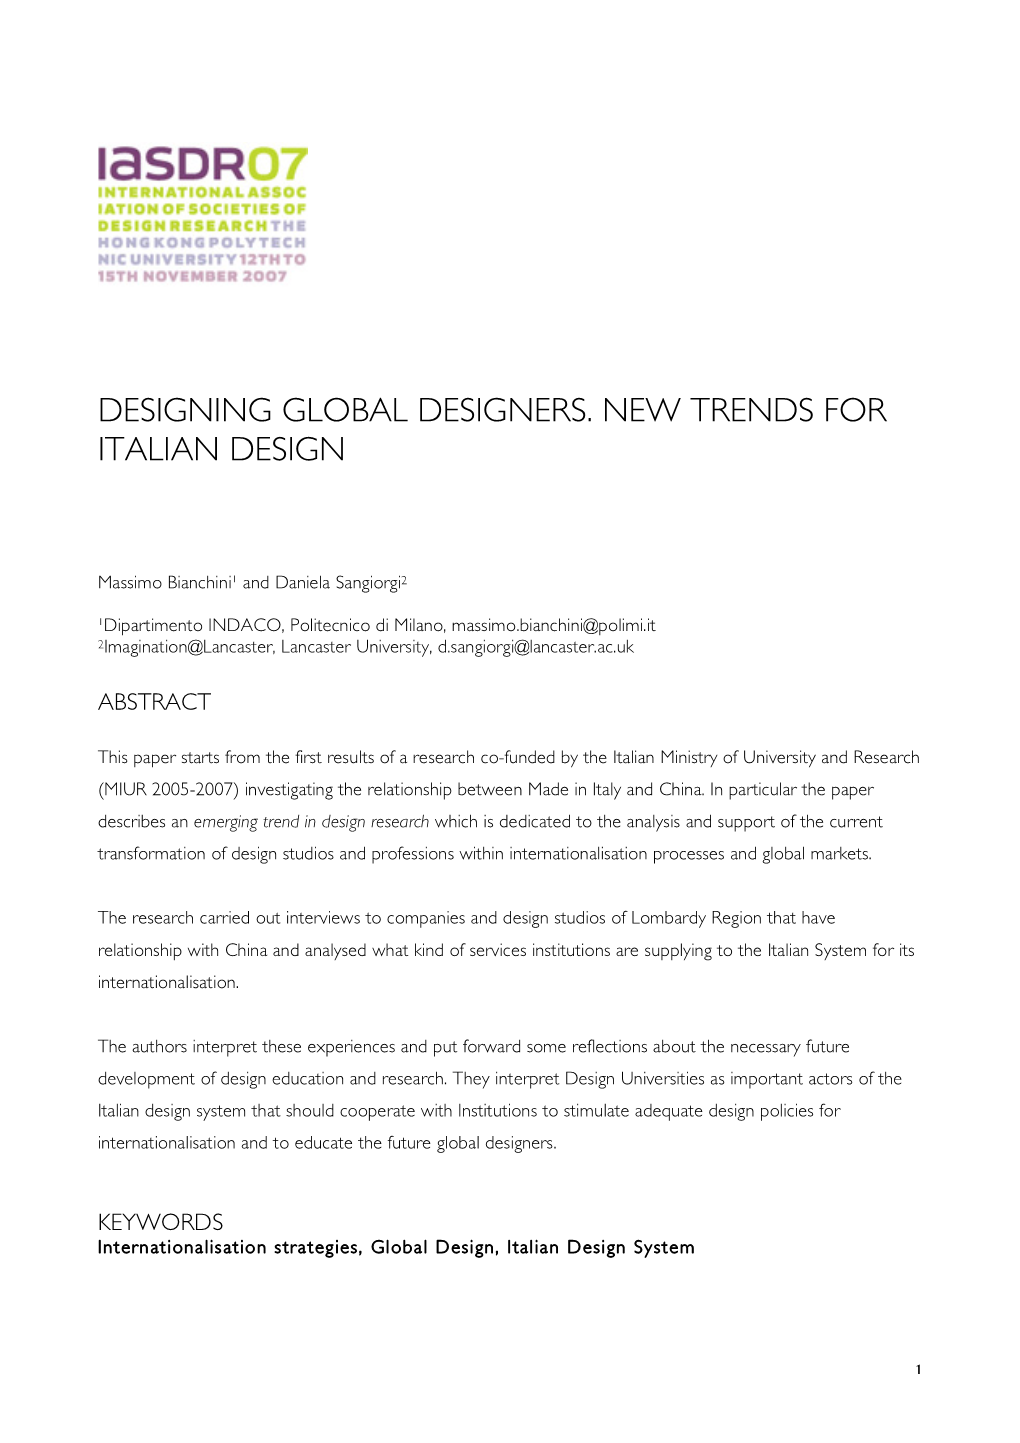 Designing Global Designers. New Trends for Italian Design